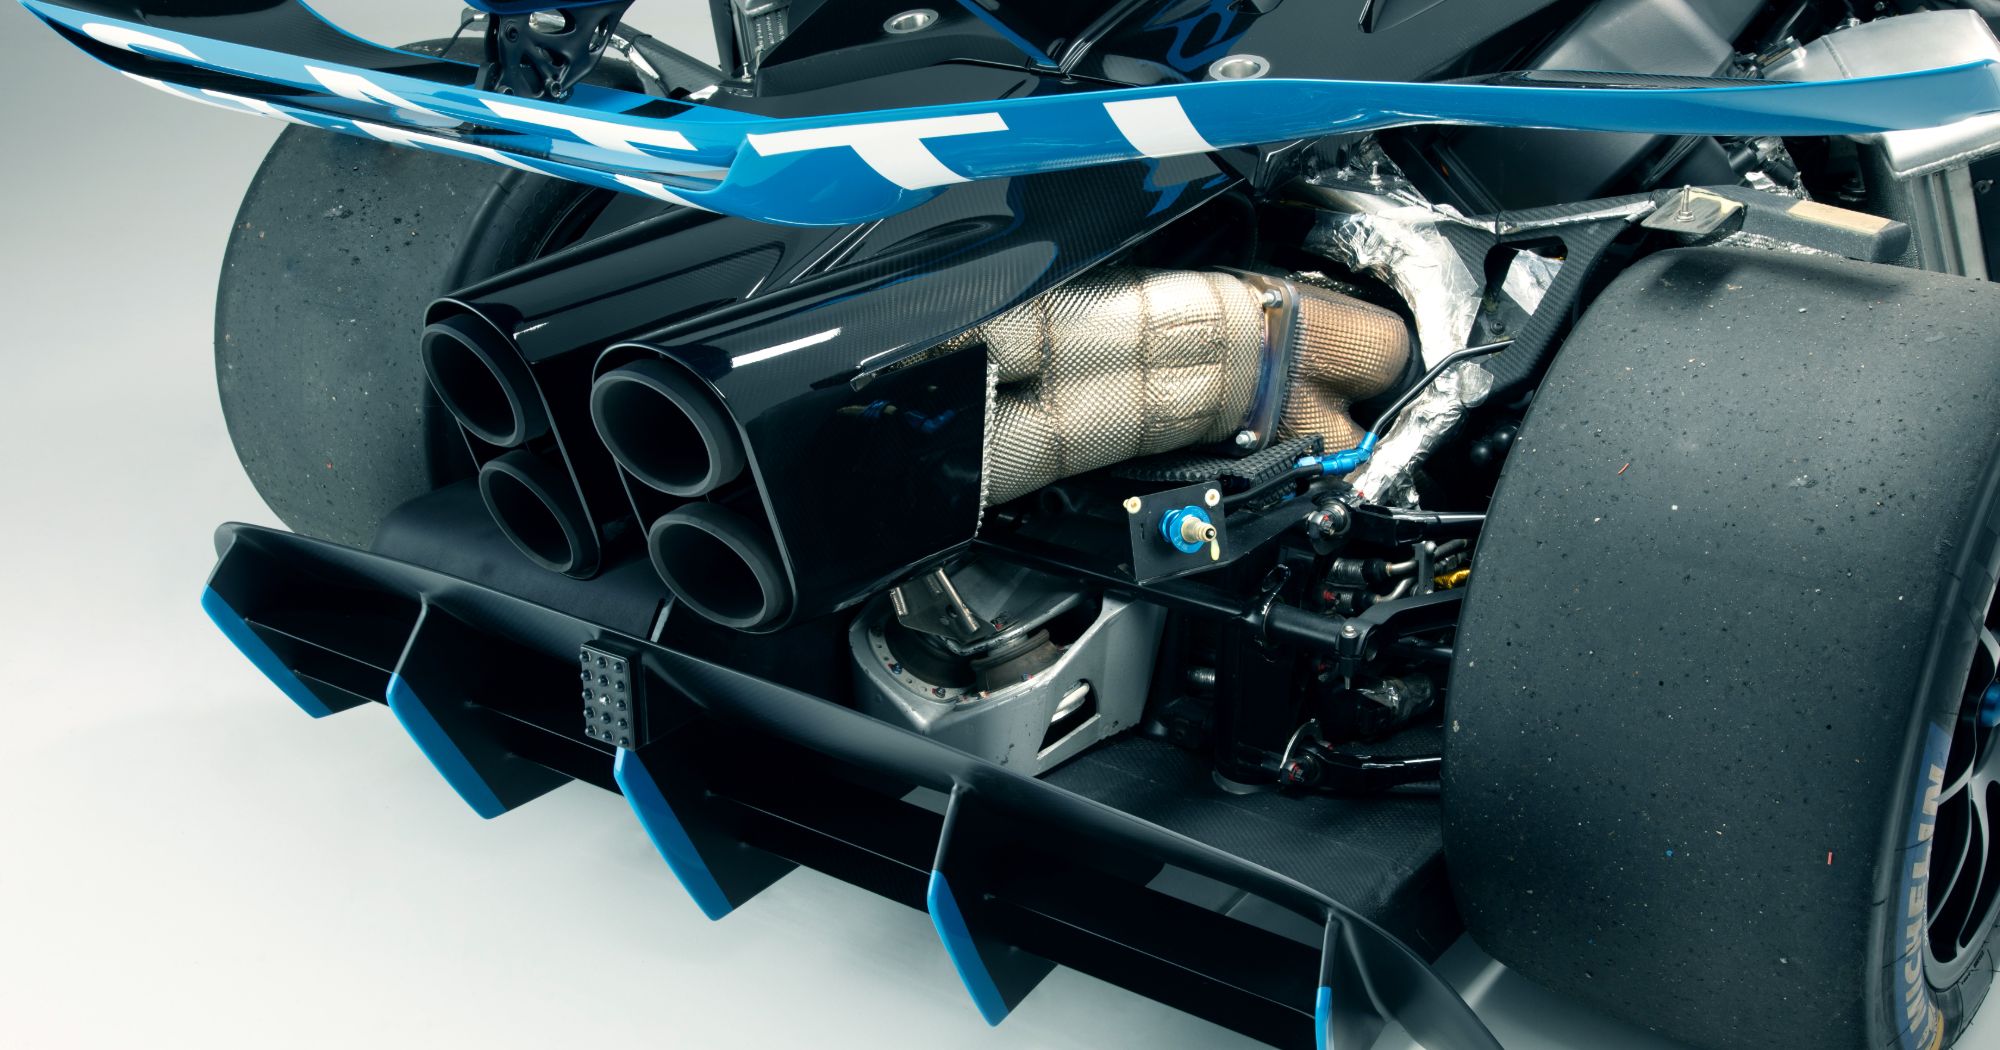 Bugatti Exhaust Trim Cover Is 3D-Printed From Titanium - autoevolution